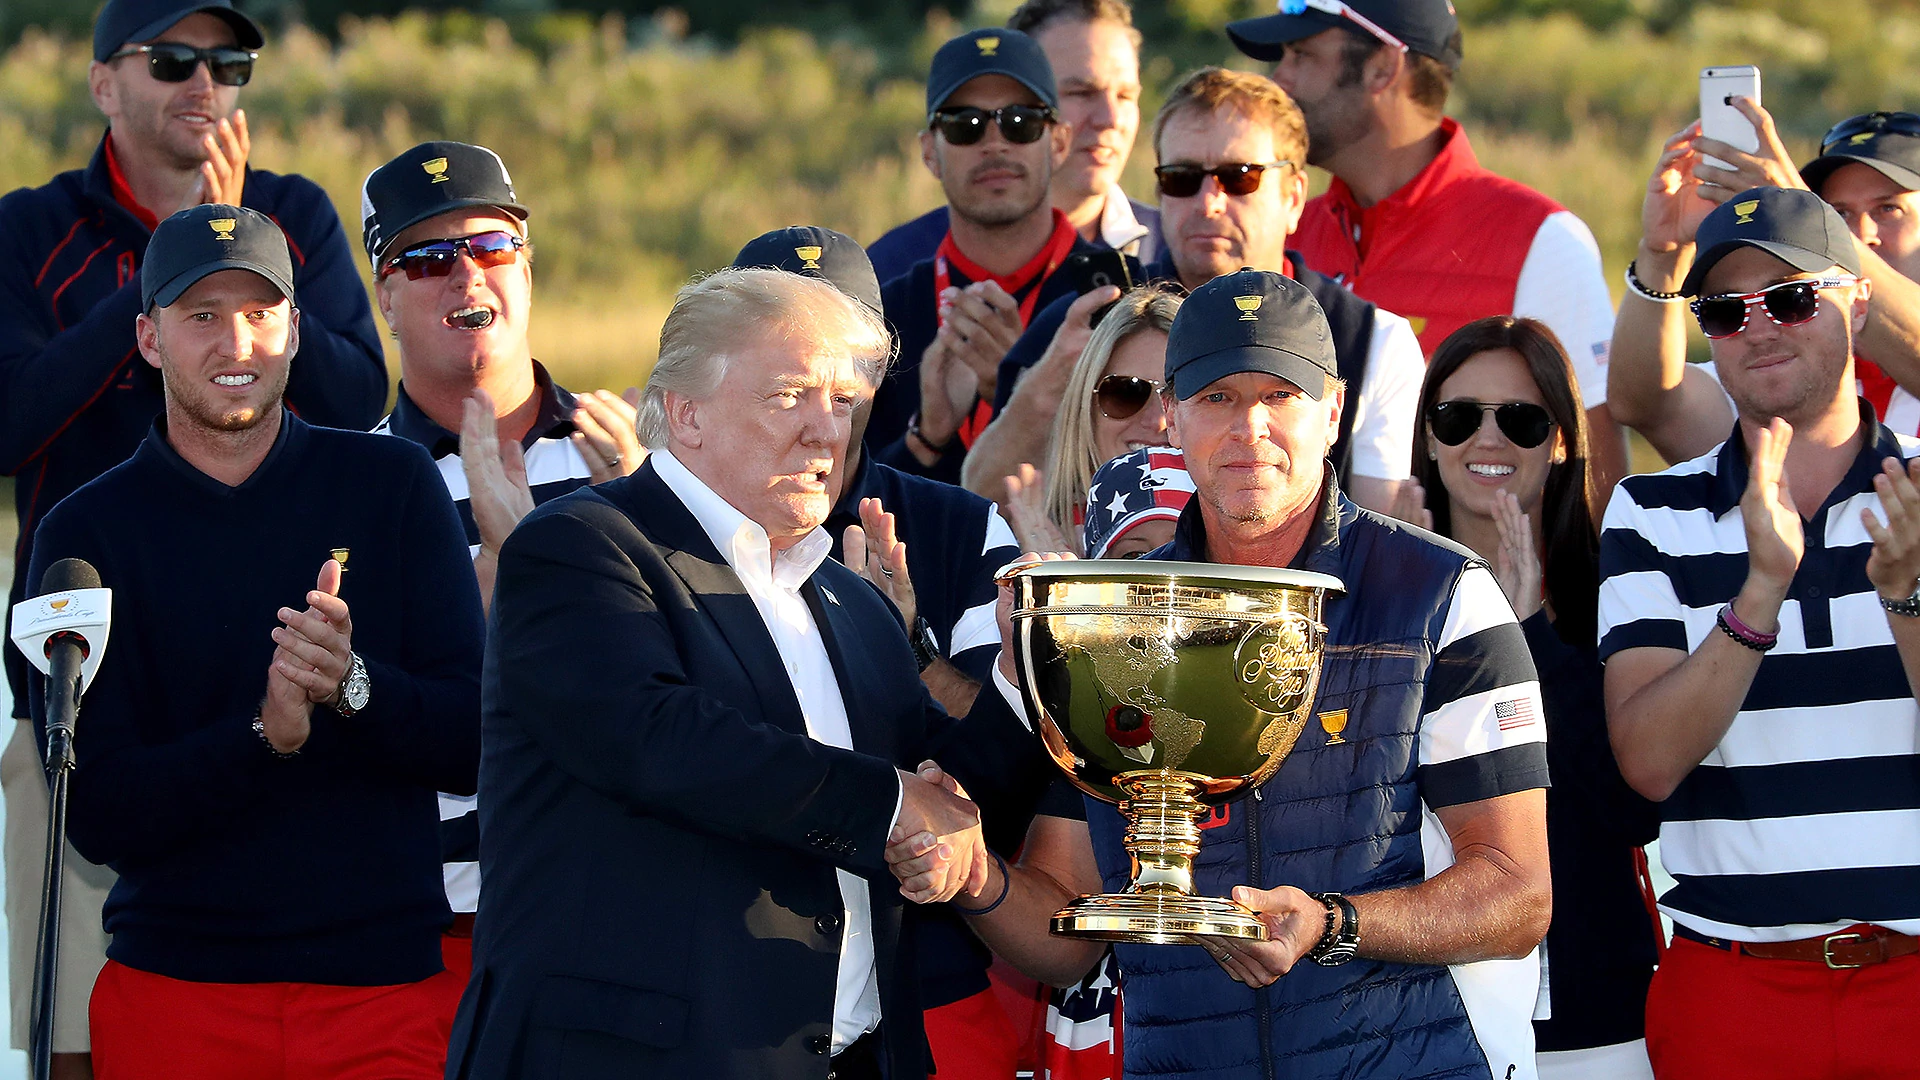 Watch: President Trump presents trophy to U.S. team